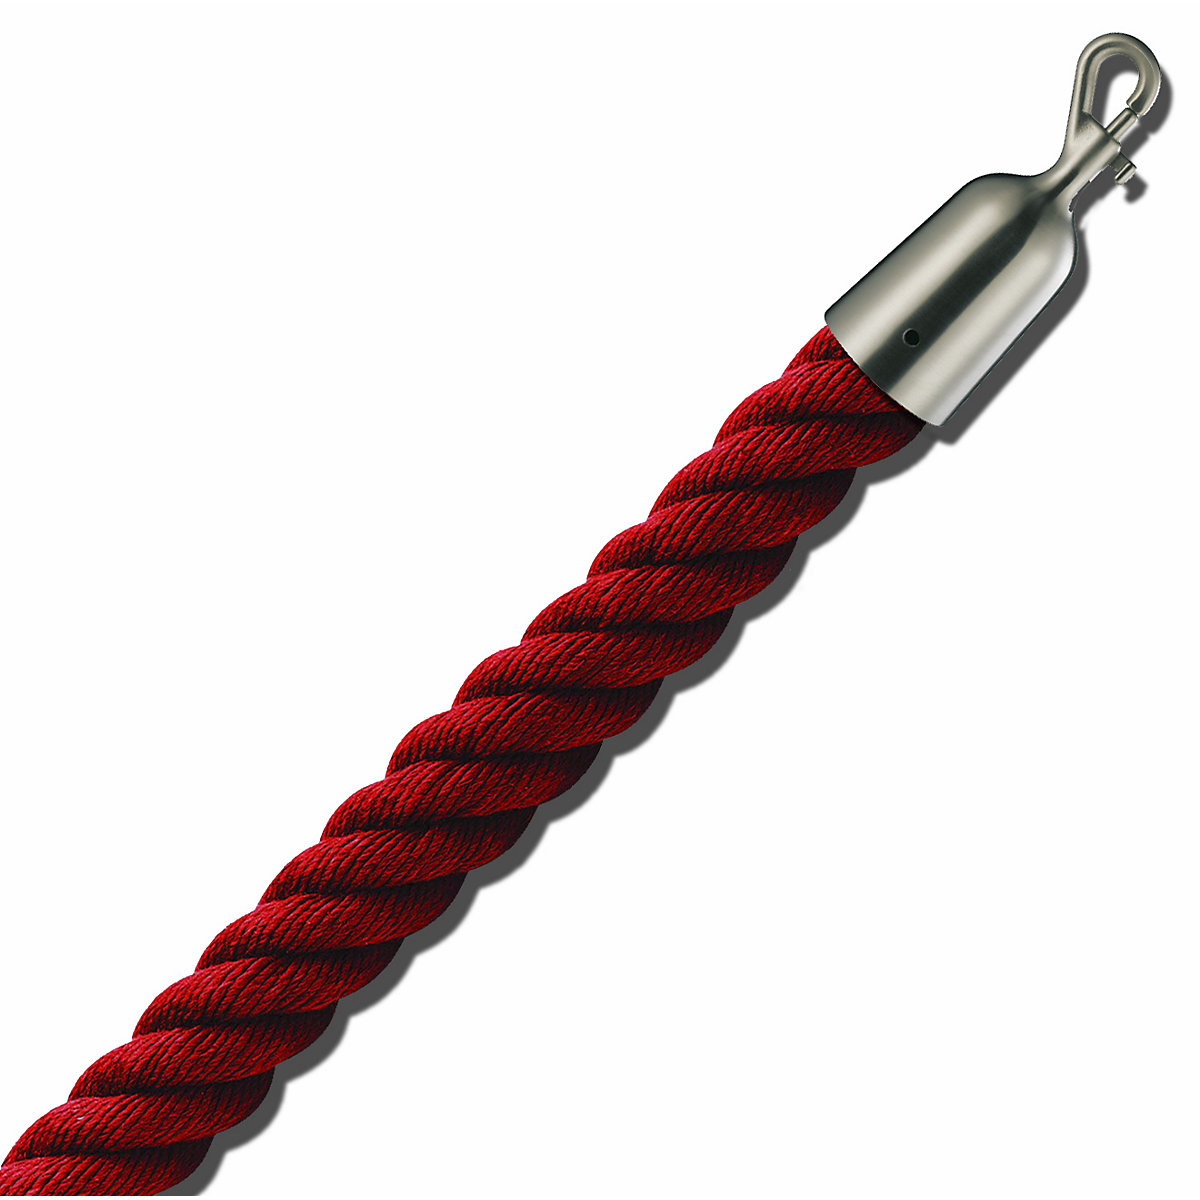 Barrier cord 1.5 m, matt nickel end caps, red cord-6